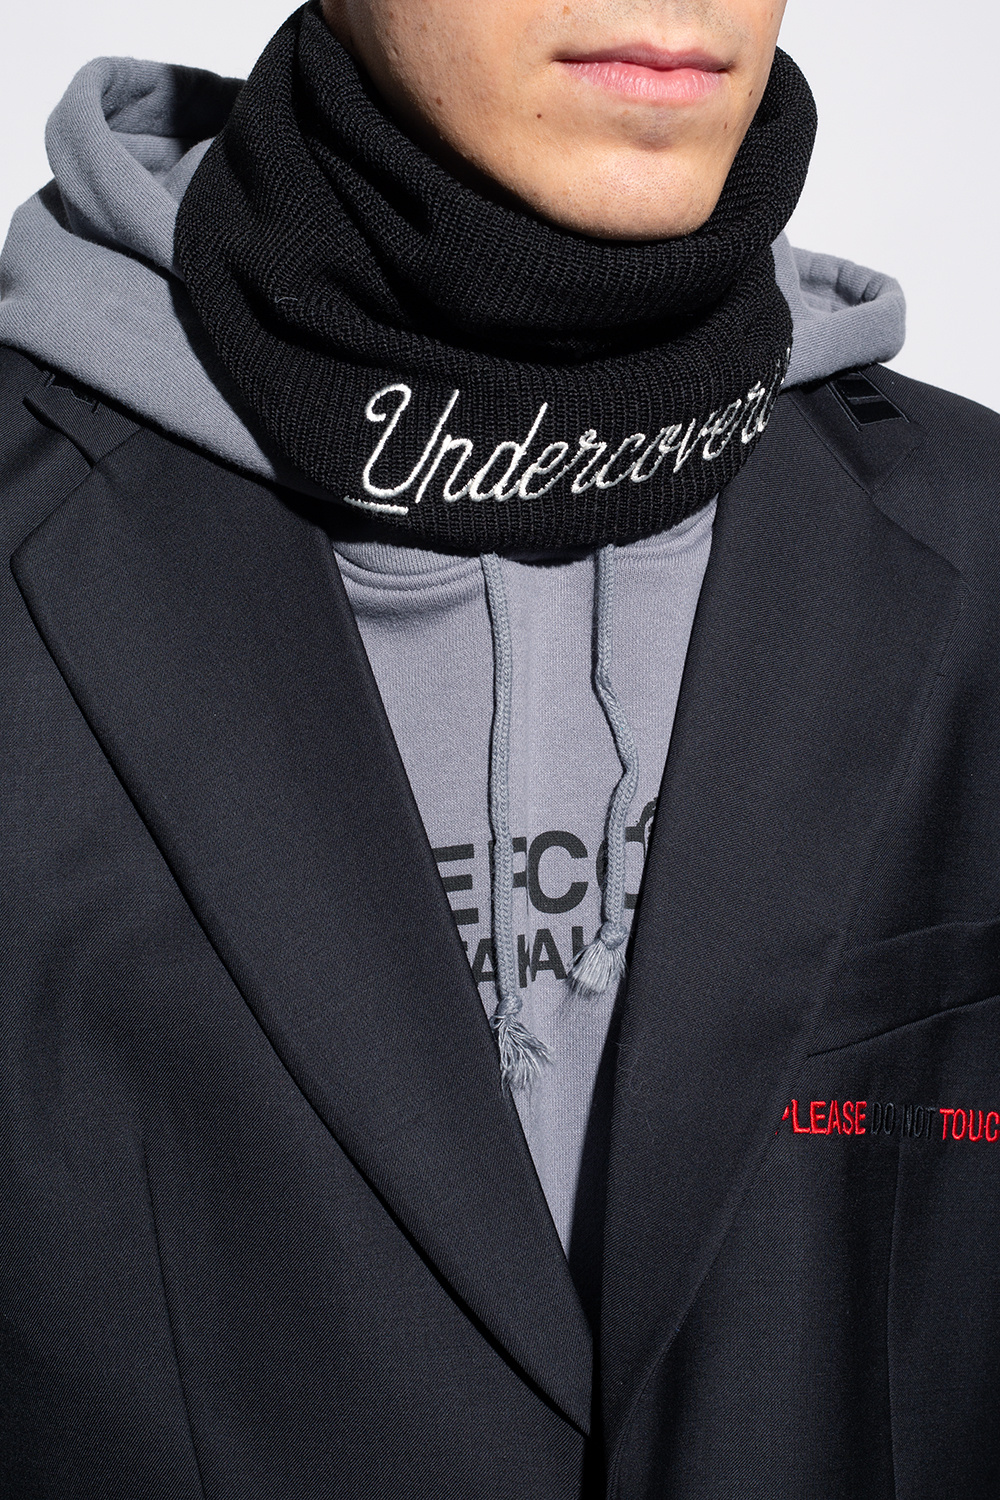 Undercover New Era Bred Bulls hat universal x Jordan AJ11 Legacy Apparel